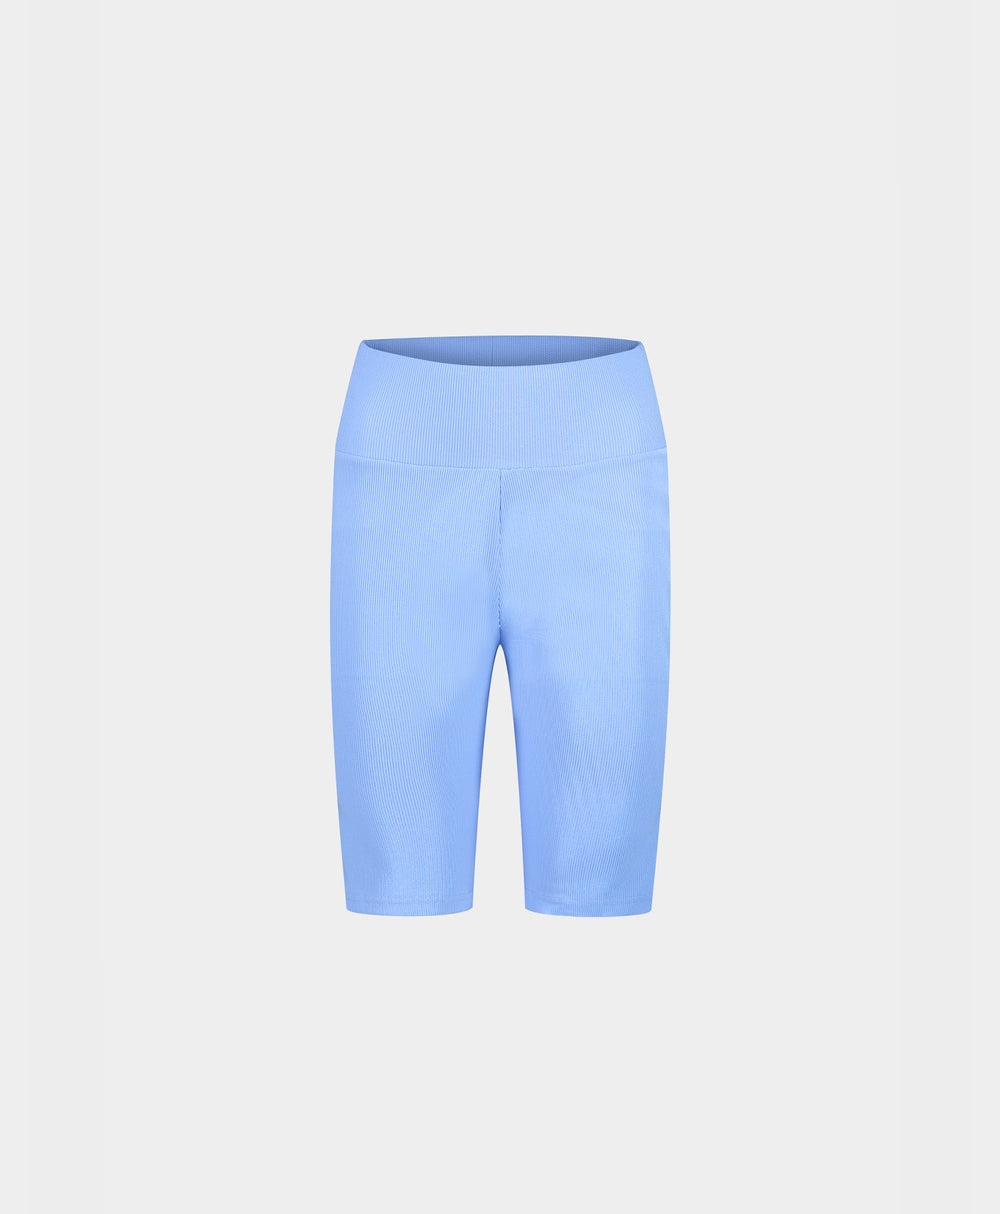 DP - Baby Blue Revin Cycle Shorts - Packshot - Front